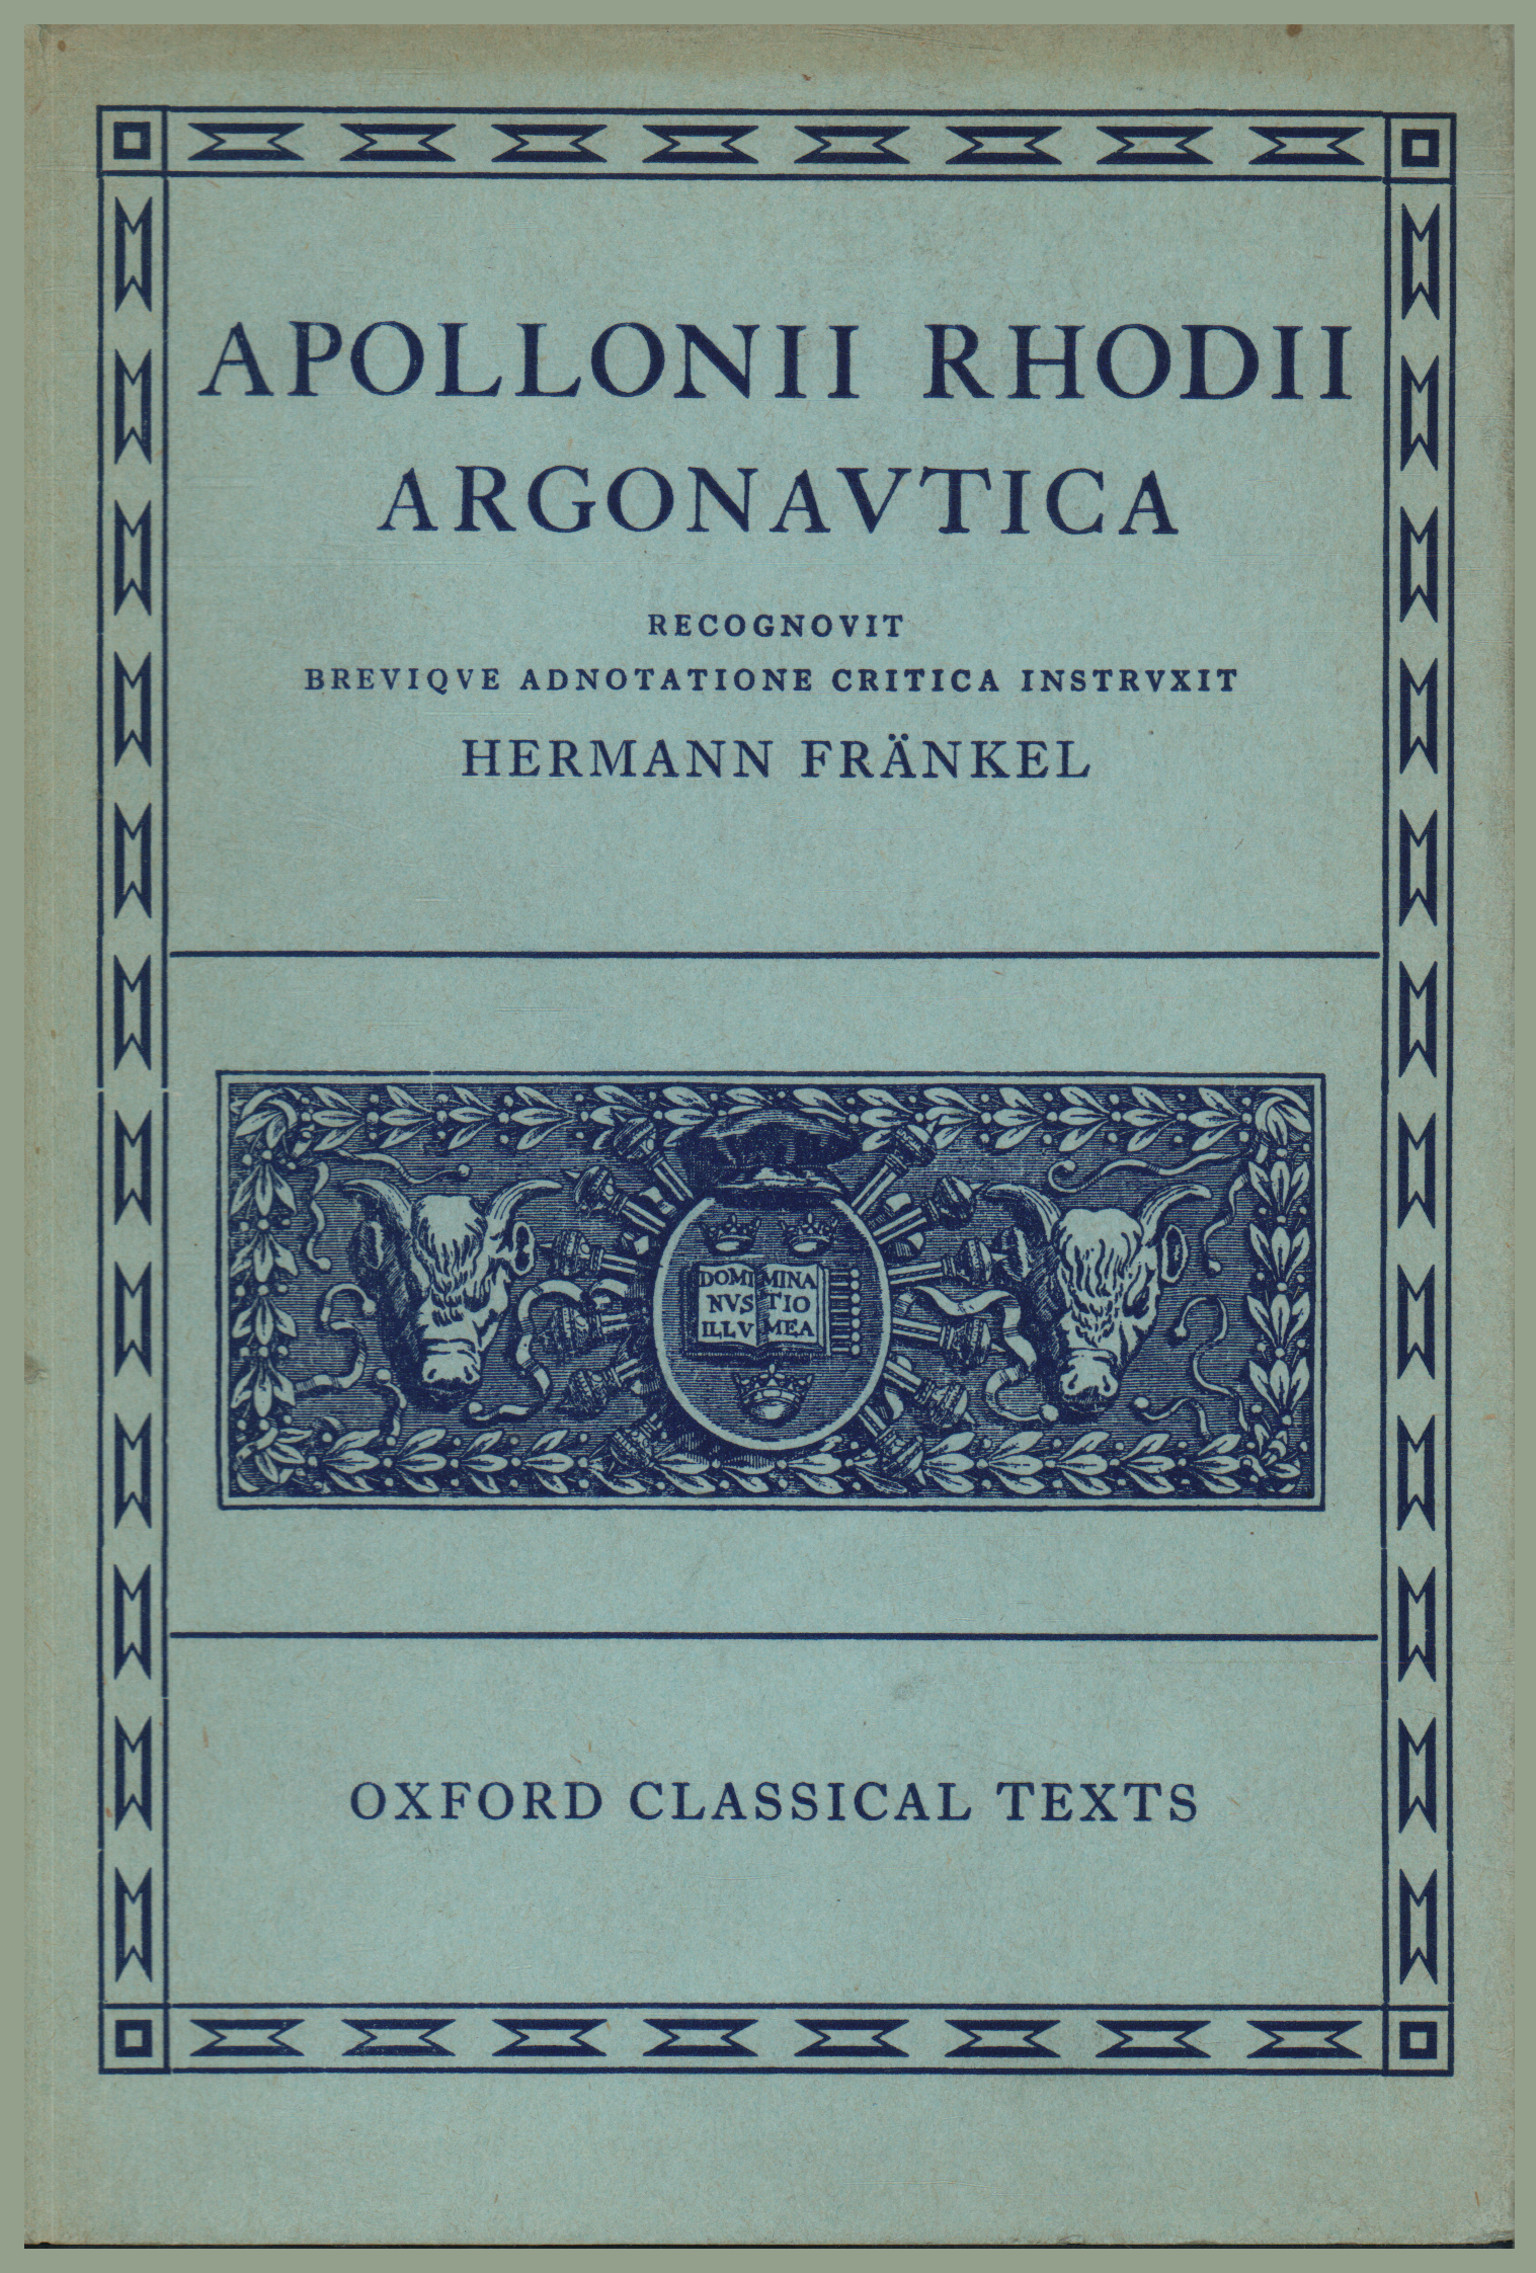 Argonautica, Apollonio Rodio